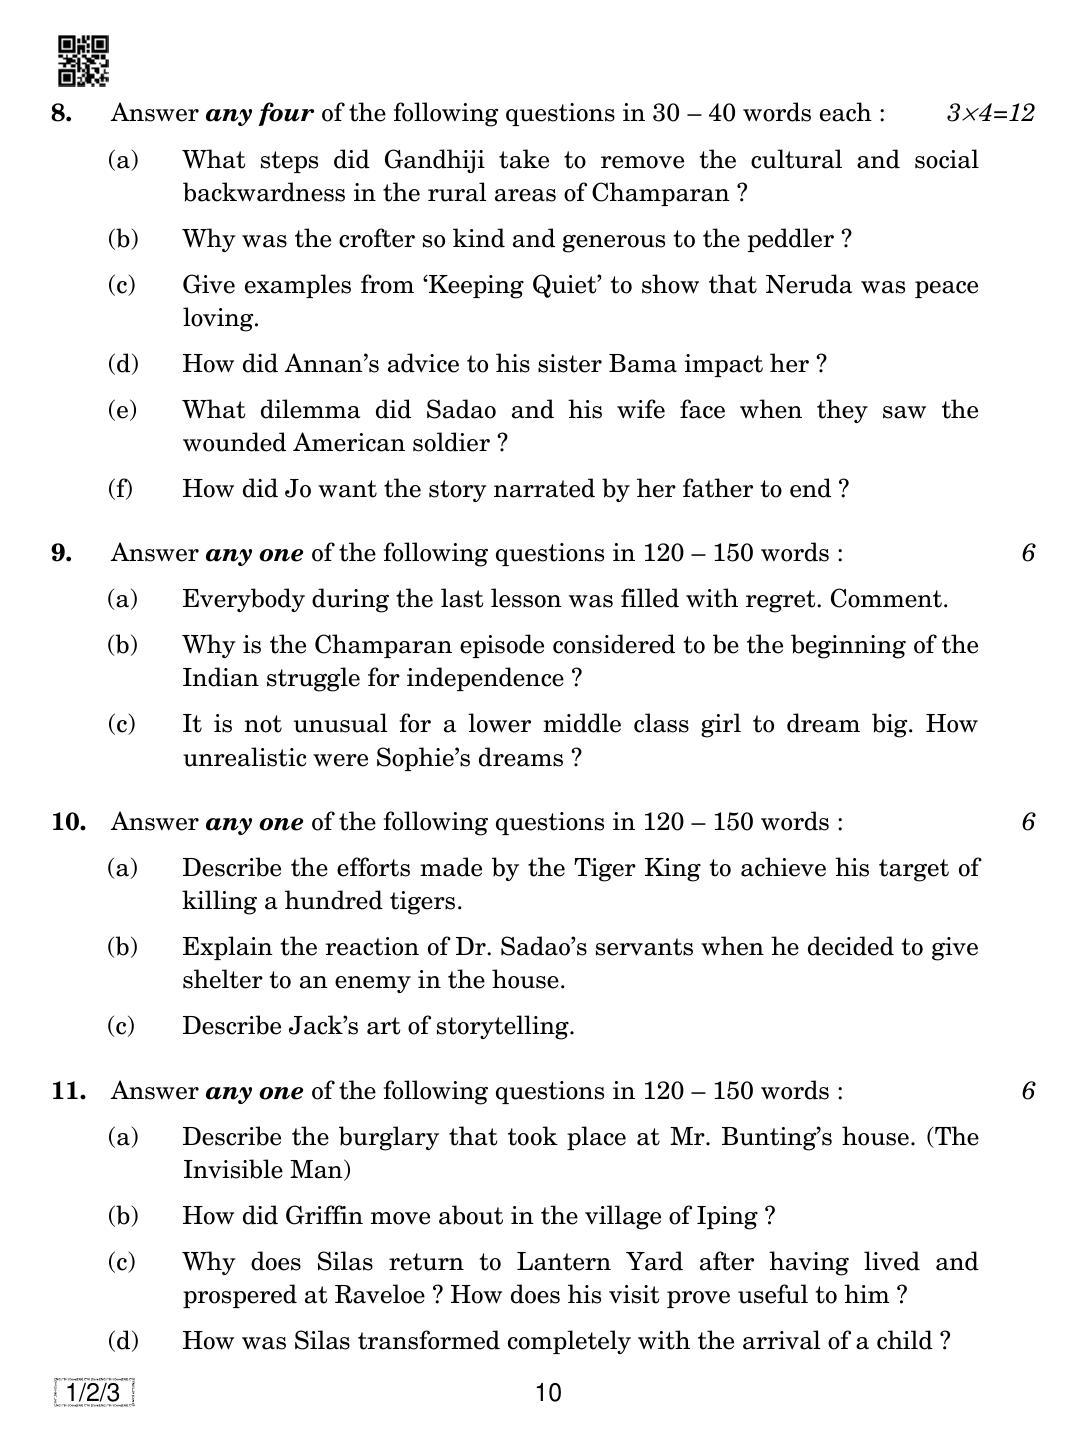 CBSE Class 12 1-2-3 English Core 2019 Question Paper - Page 10